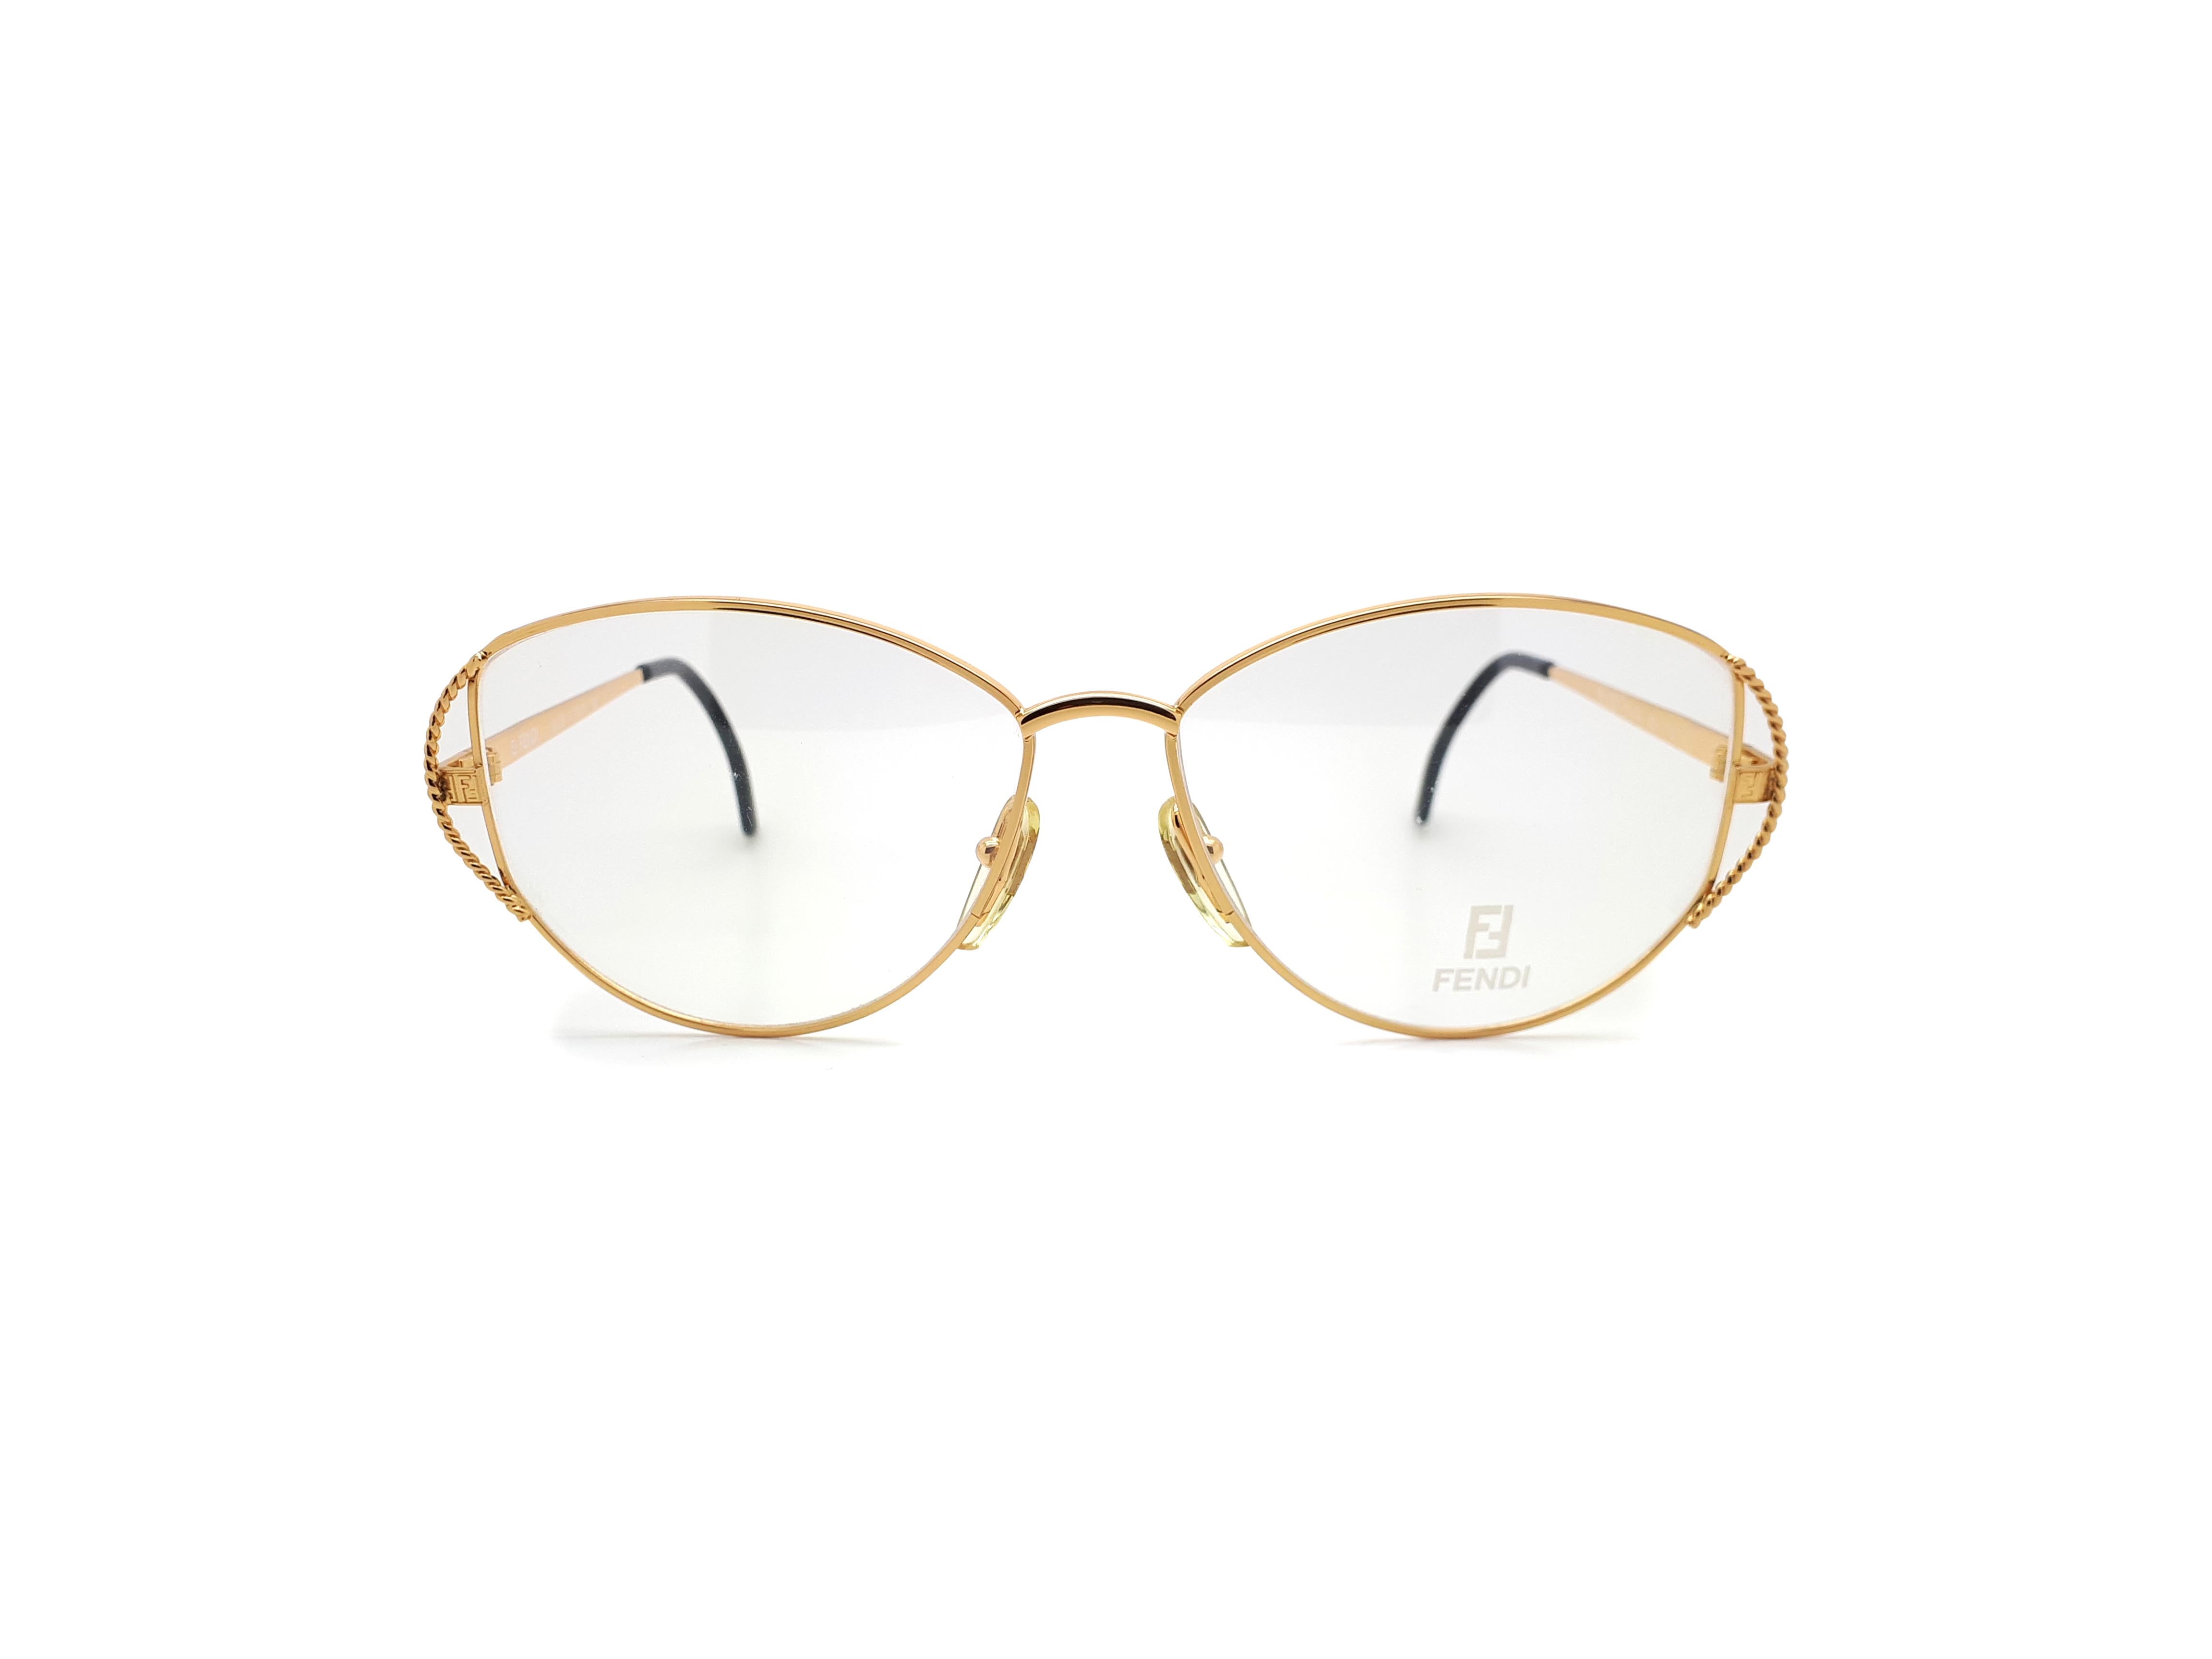 Vintage Fendi Glasses Frames, Really gorgeous